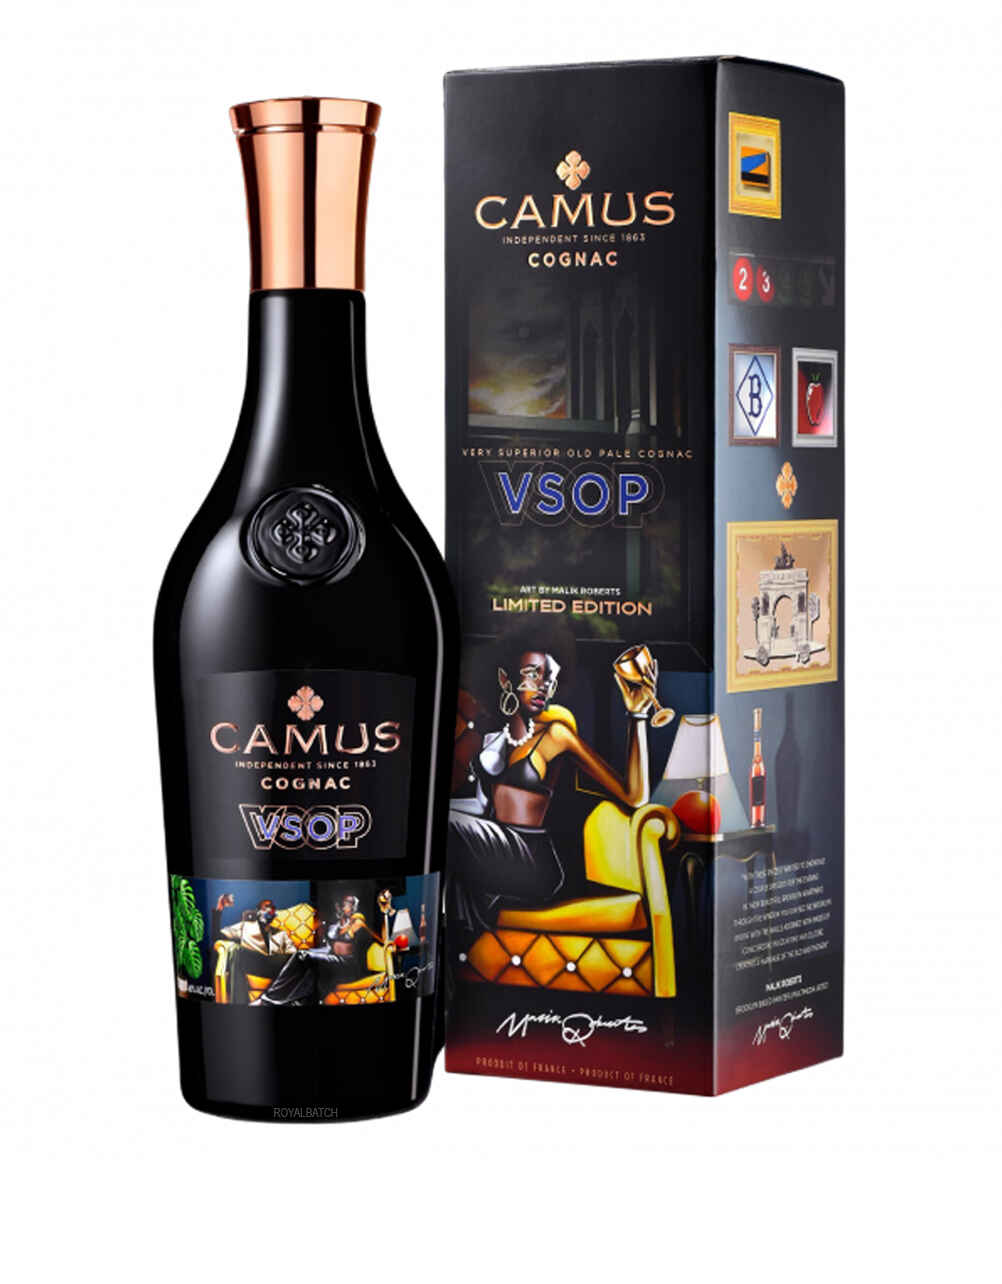 Camus VSOP Limited Edition Cognac